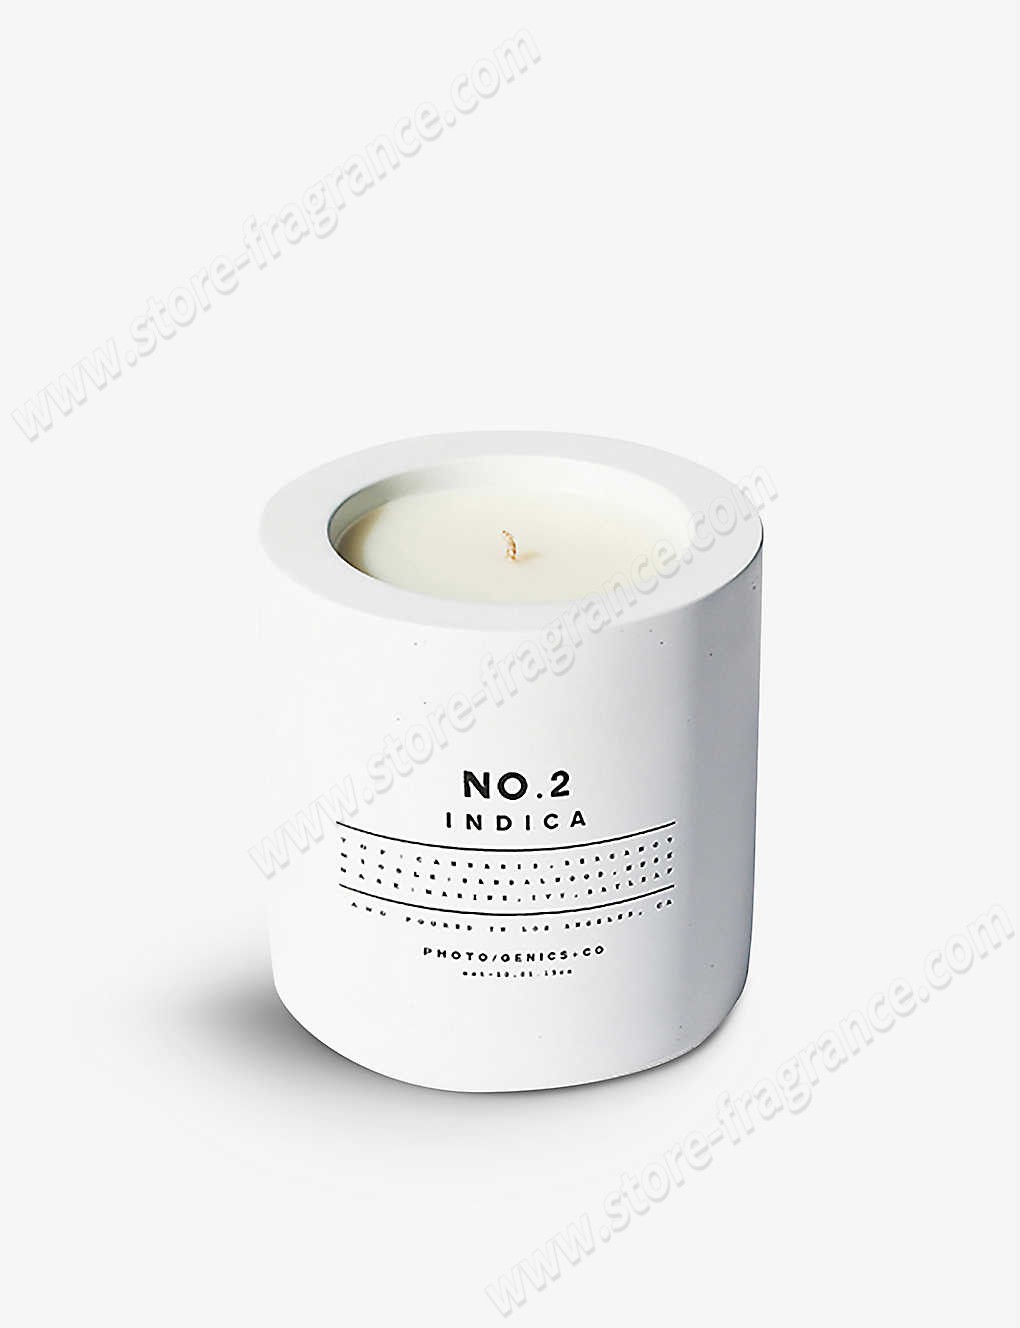 PHOTOGENICS & CO./No. 2 Indica concrete candle 8oz ✿ Discount Store - -0